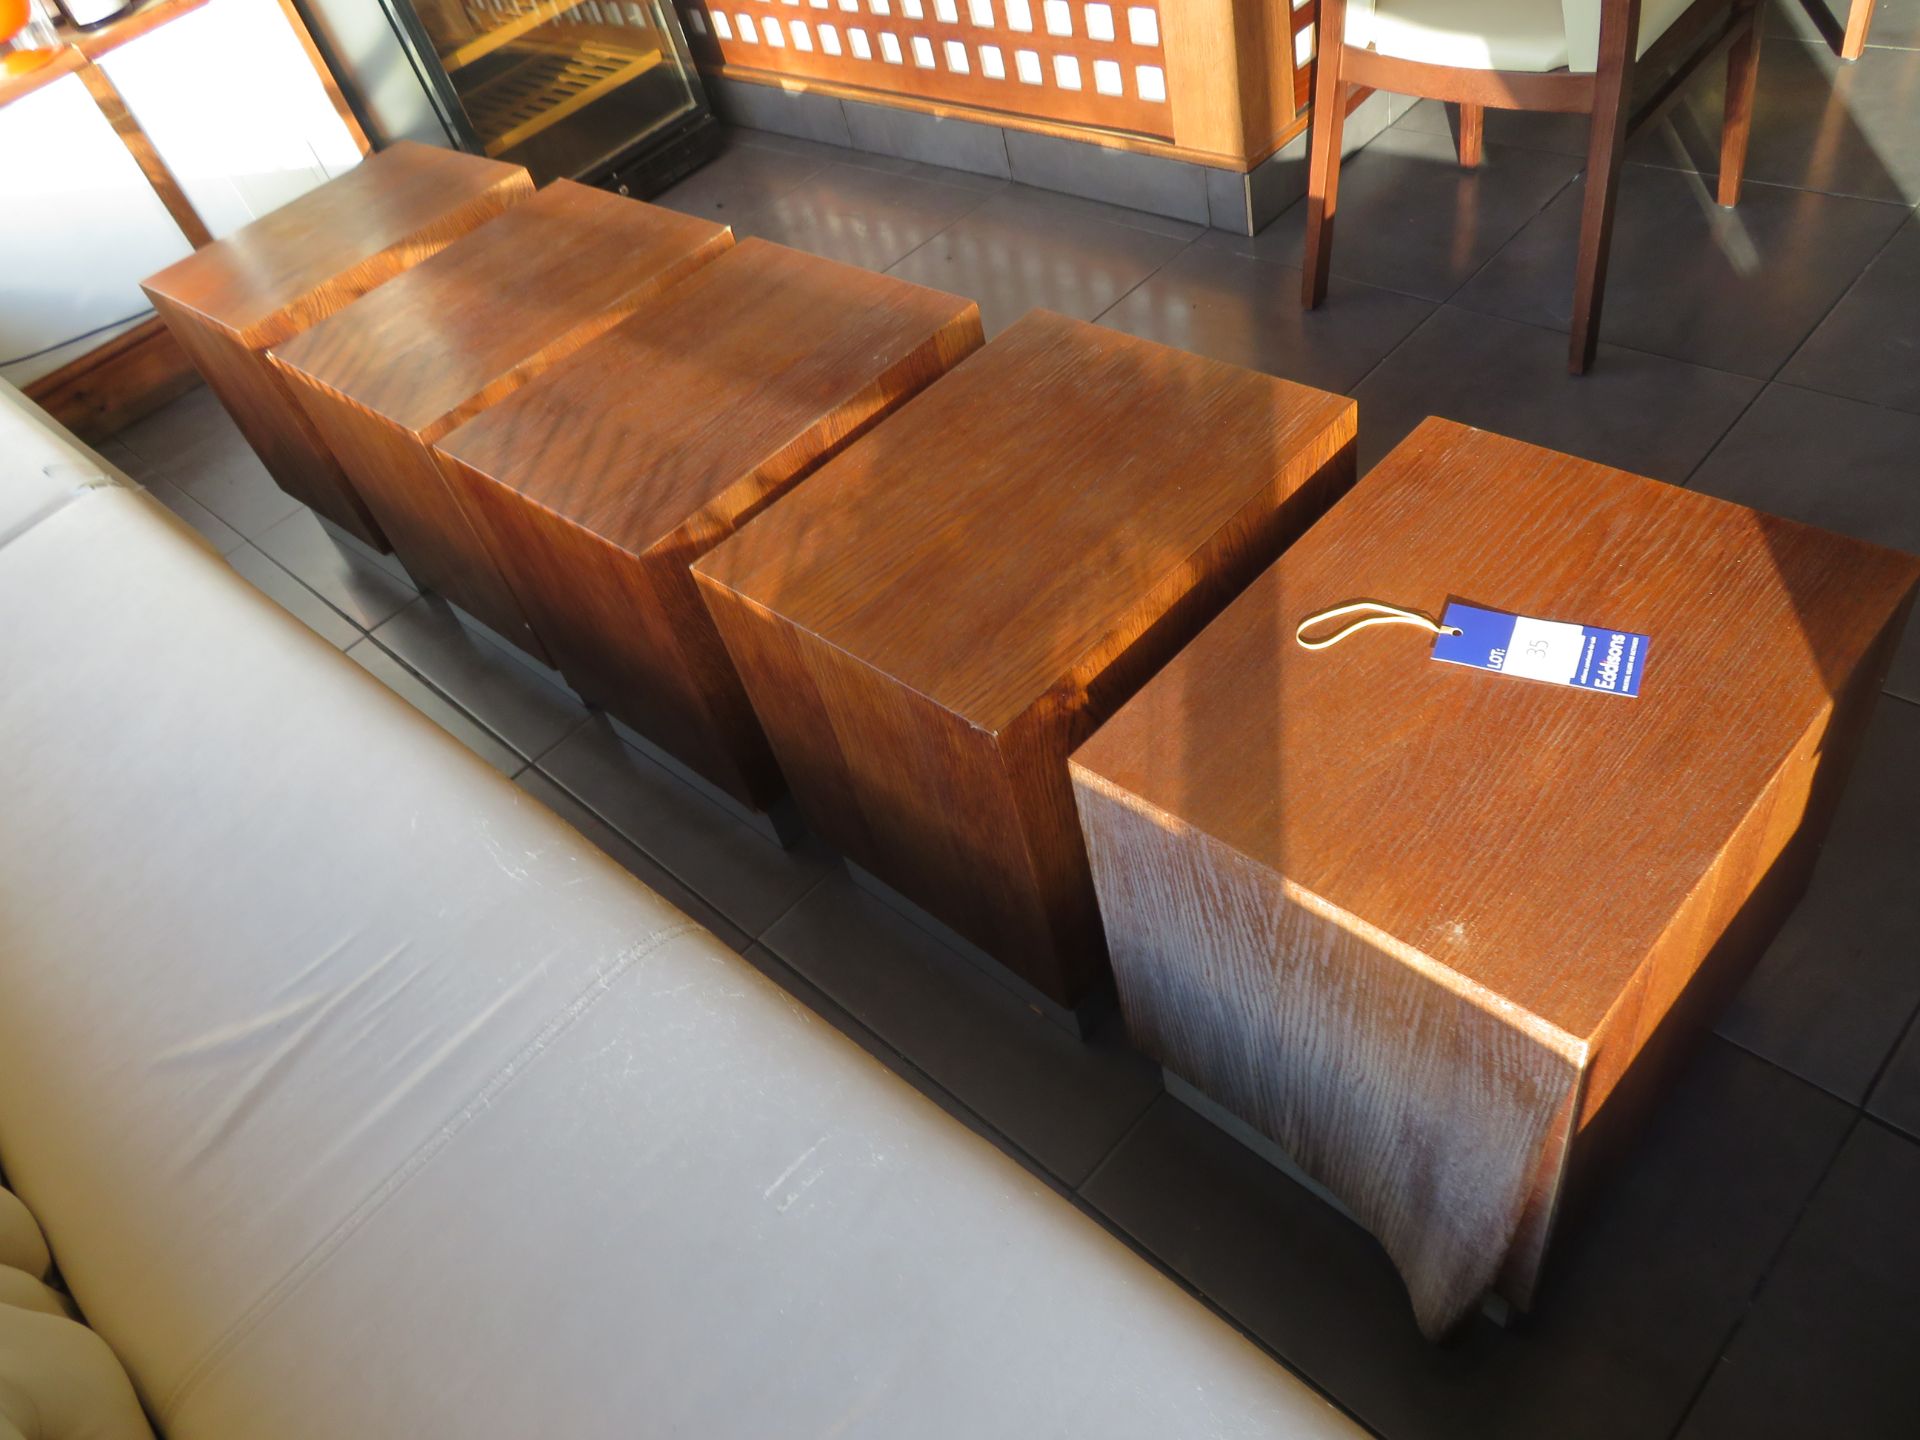 5 x Darkwood Veneer Coffee Tables (500 x 400 x 500mm high)- One Water Damaged - Image 3 of 4